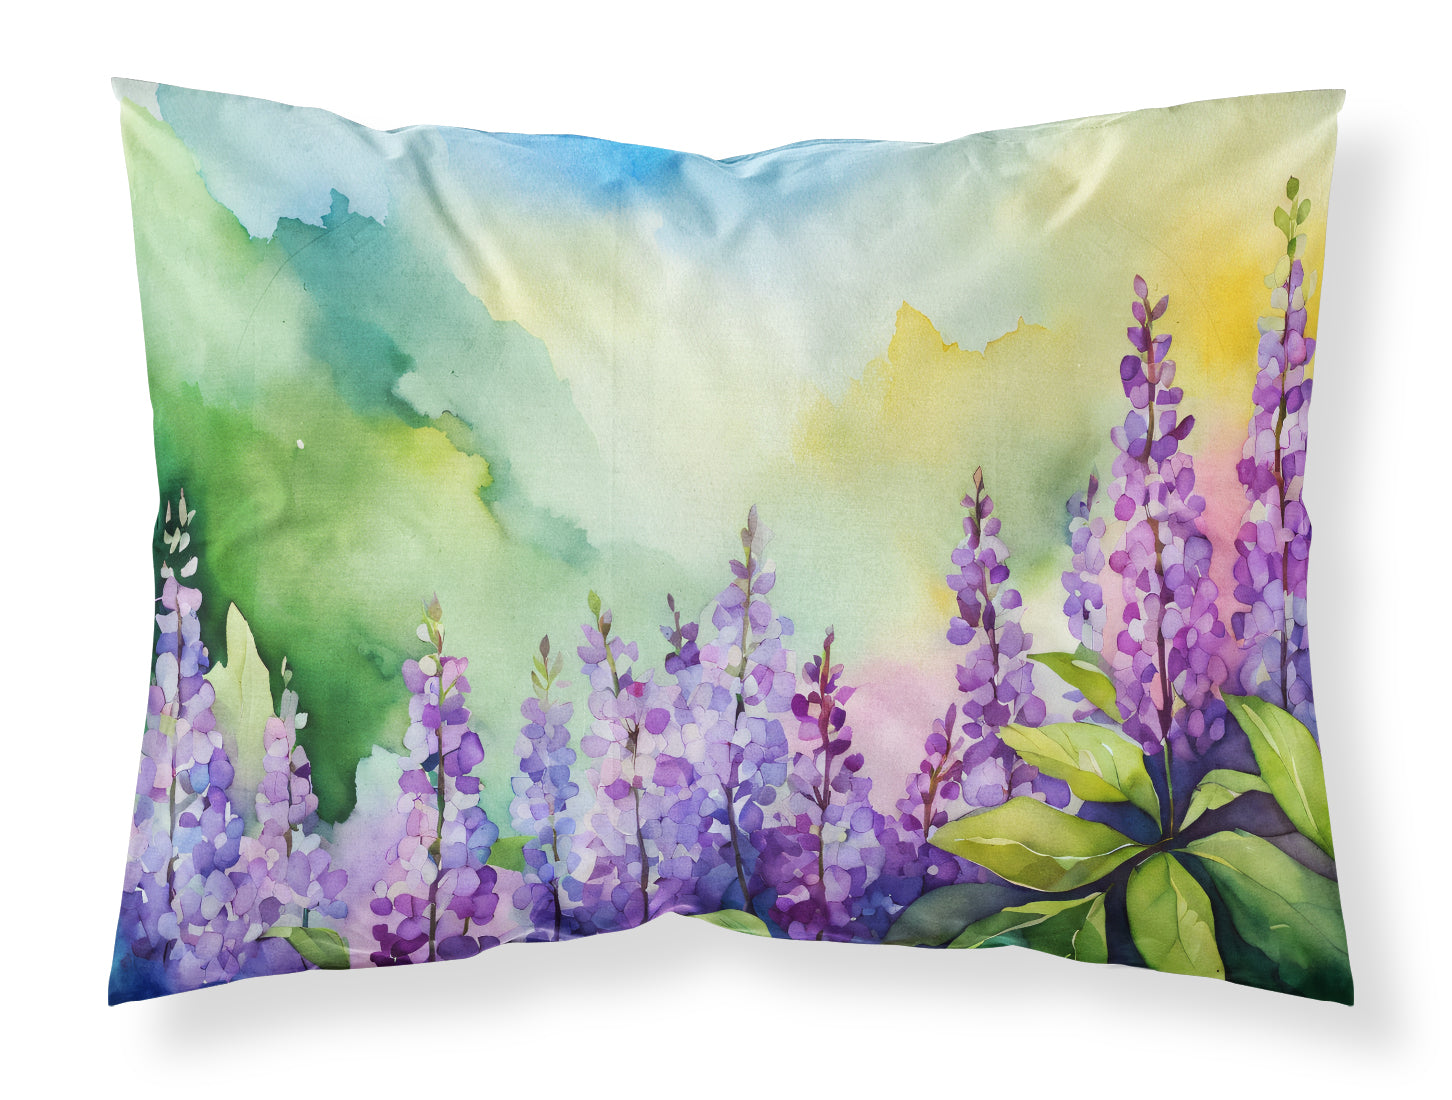 Buy this Idaho Syringa in Watercolor Fabric Standard Pillowcase